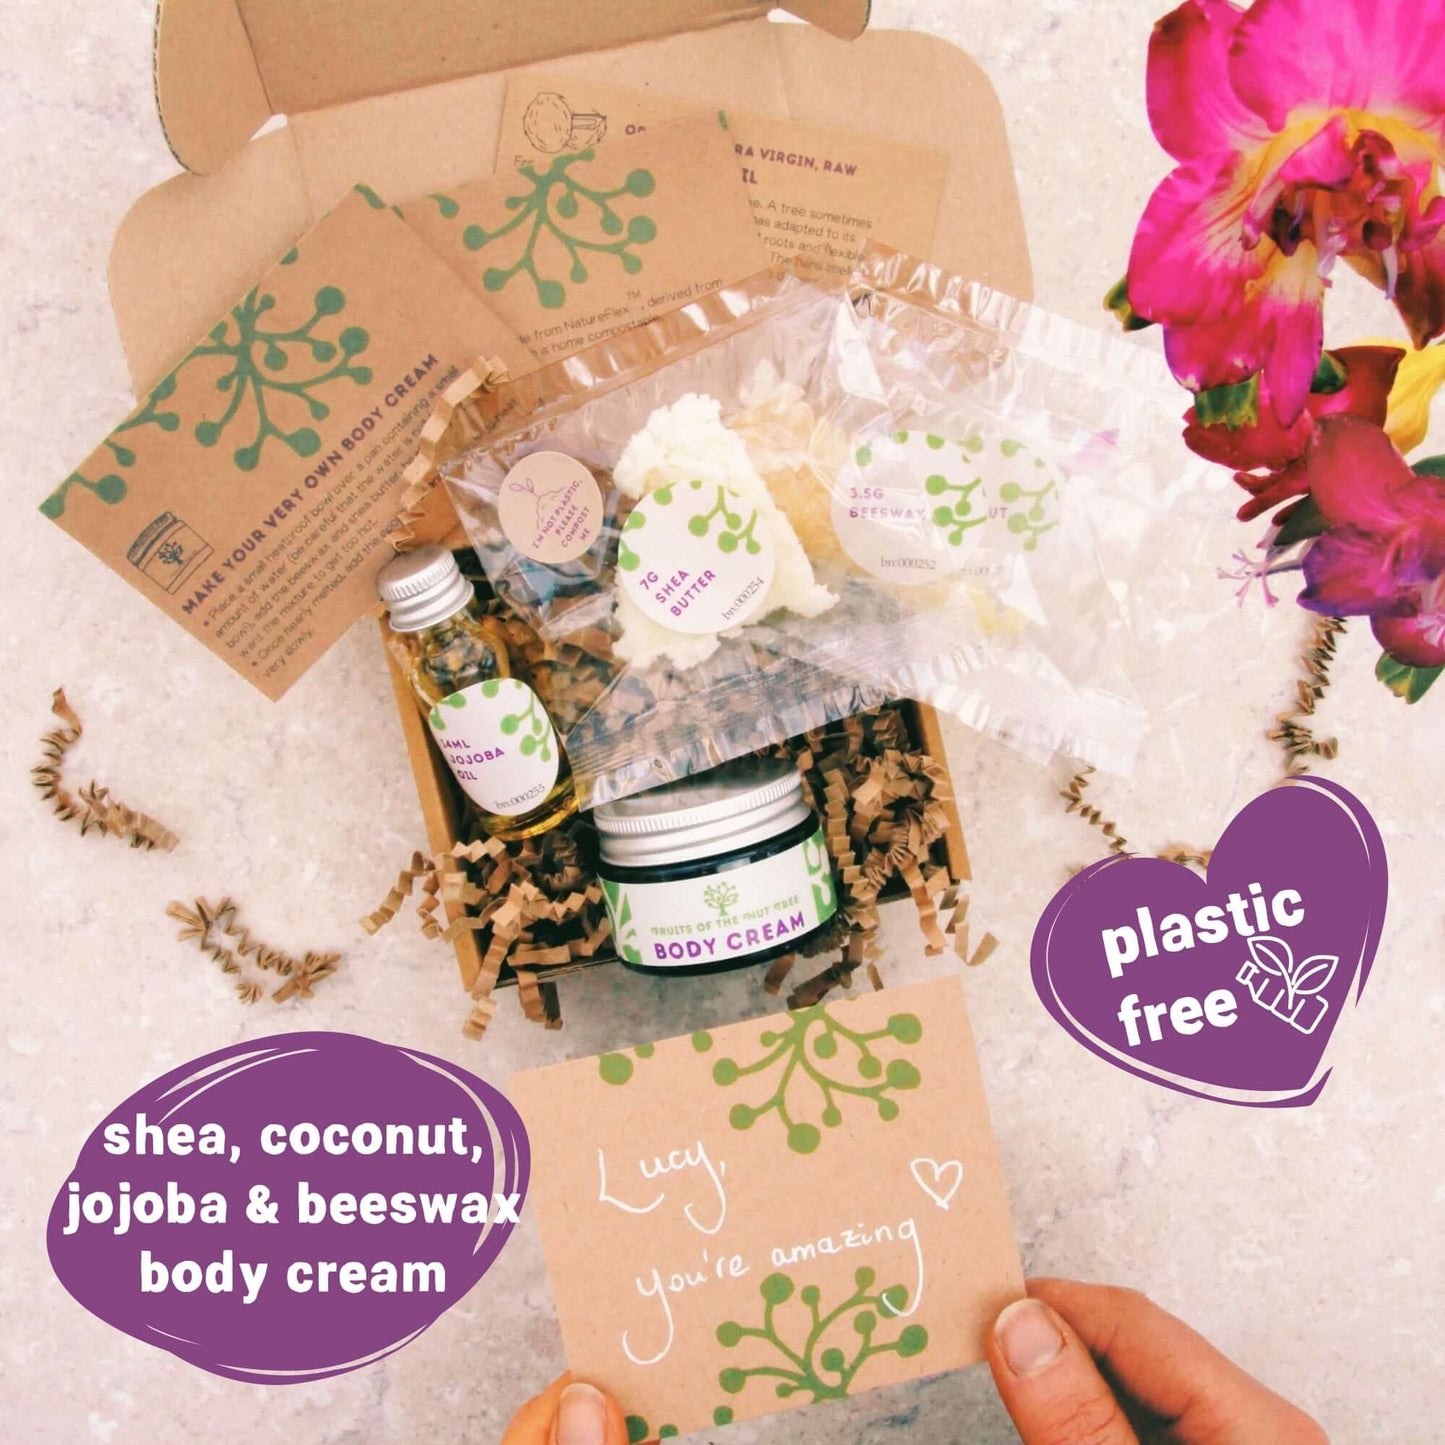 organic body cream kit inside birthday gift box